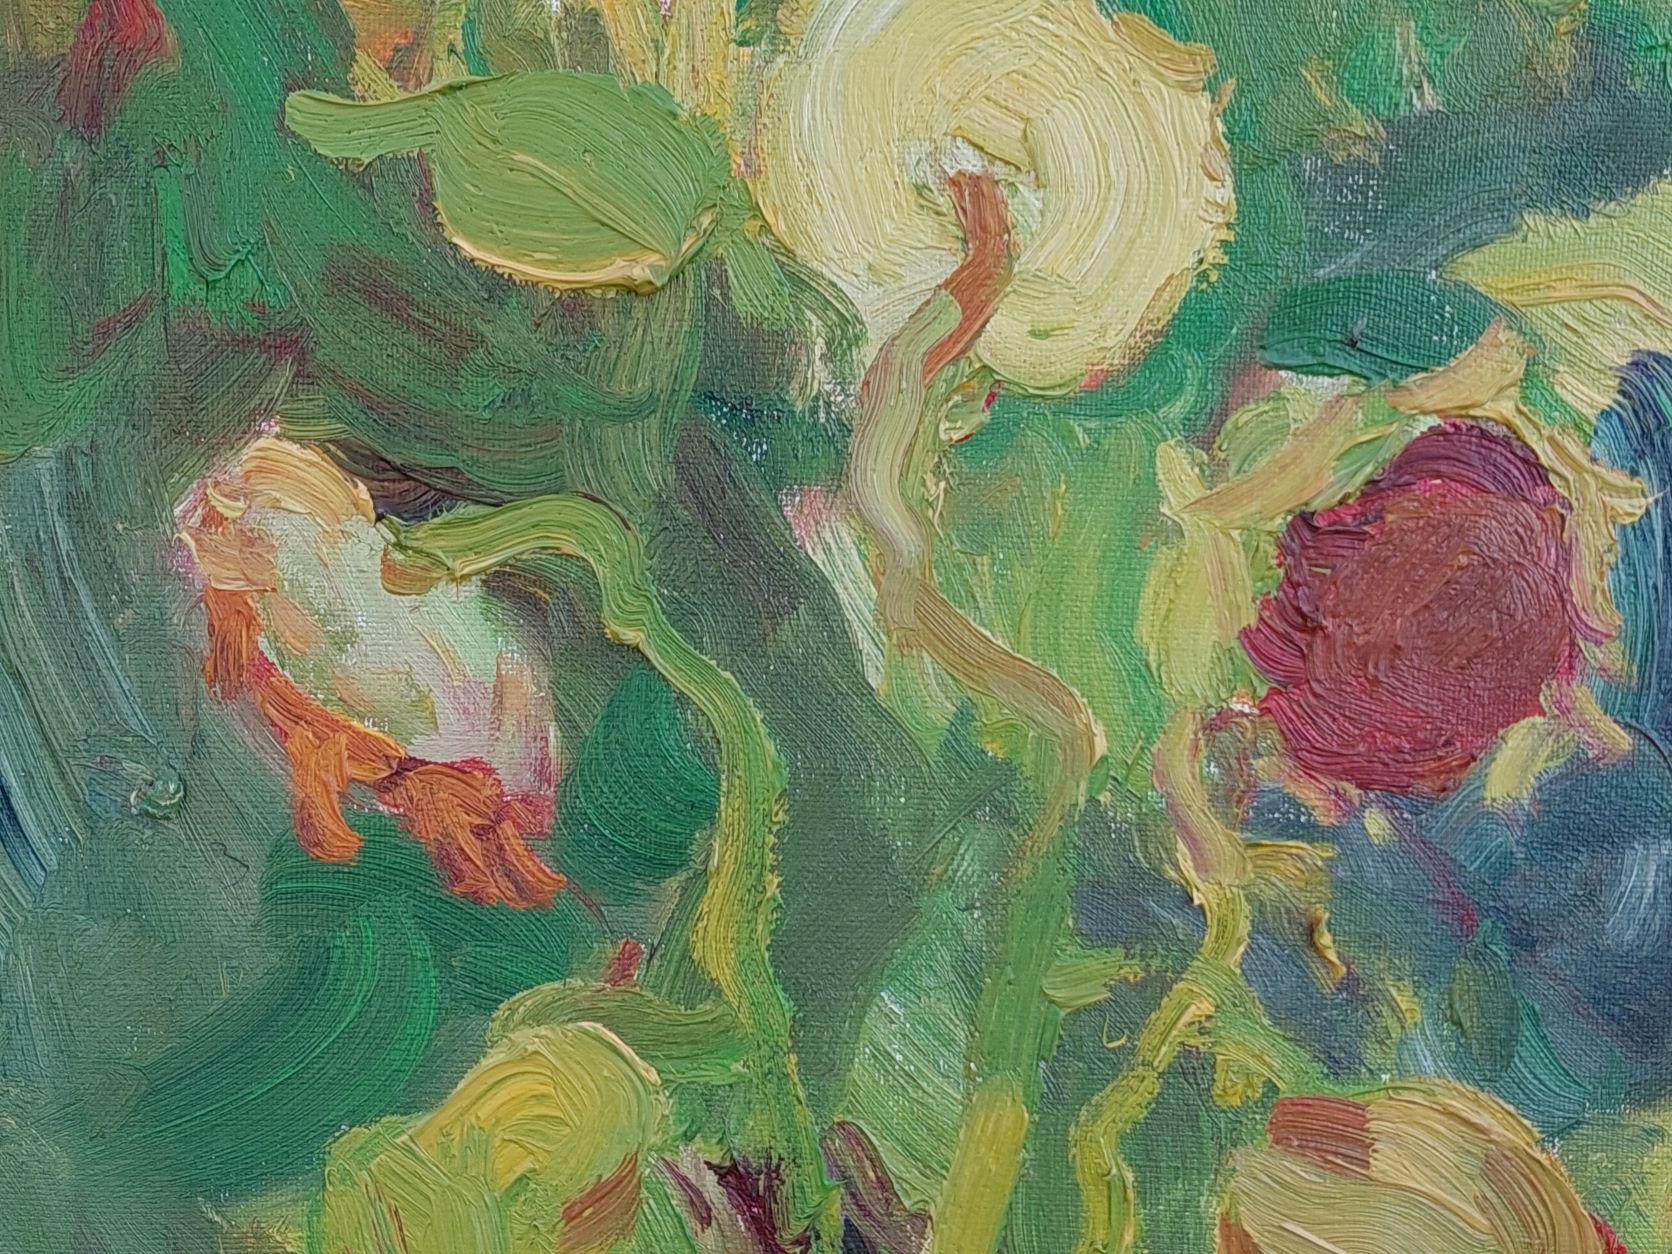 Sonnenblumen (Braun), Still-Life Painting, von Oleksandr Khrapachov